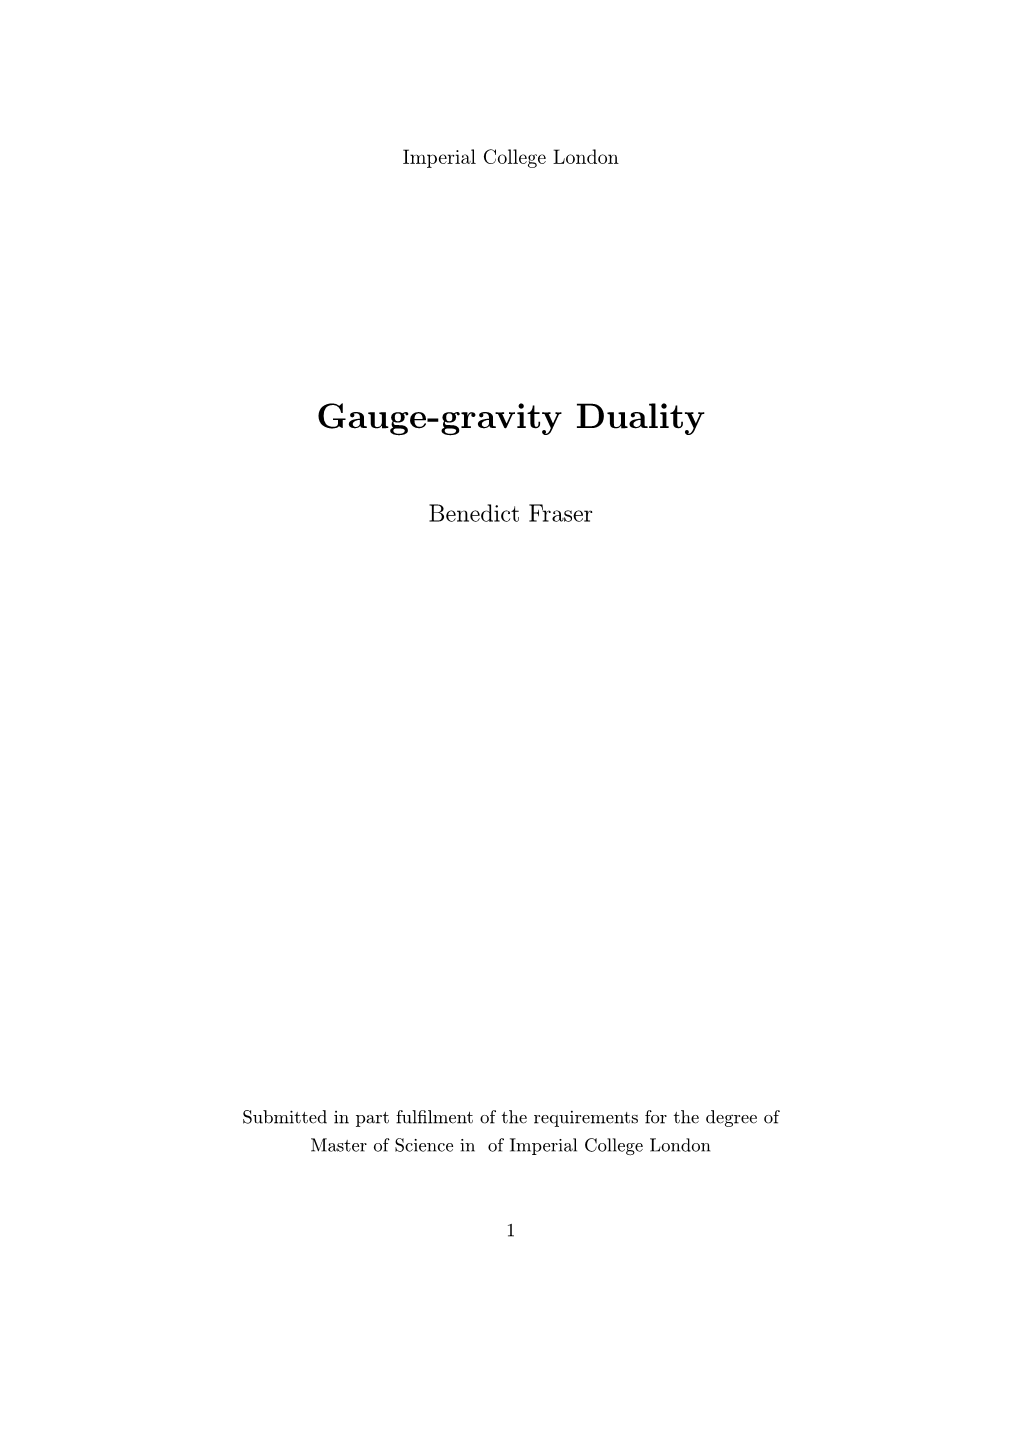 Gauge-Gravity Duality